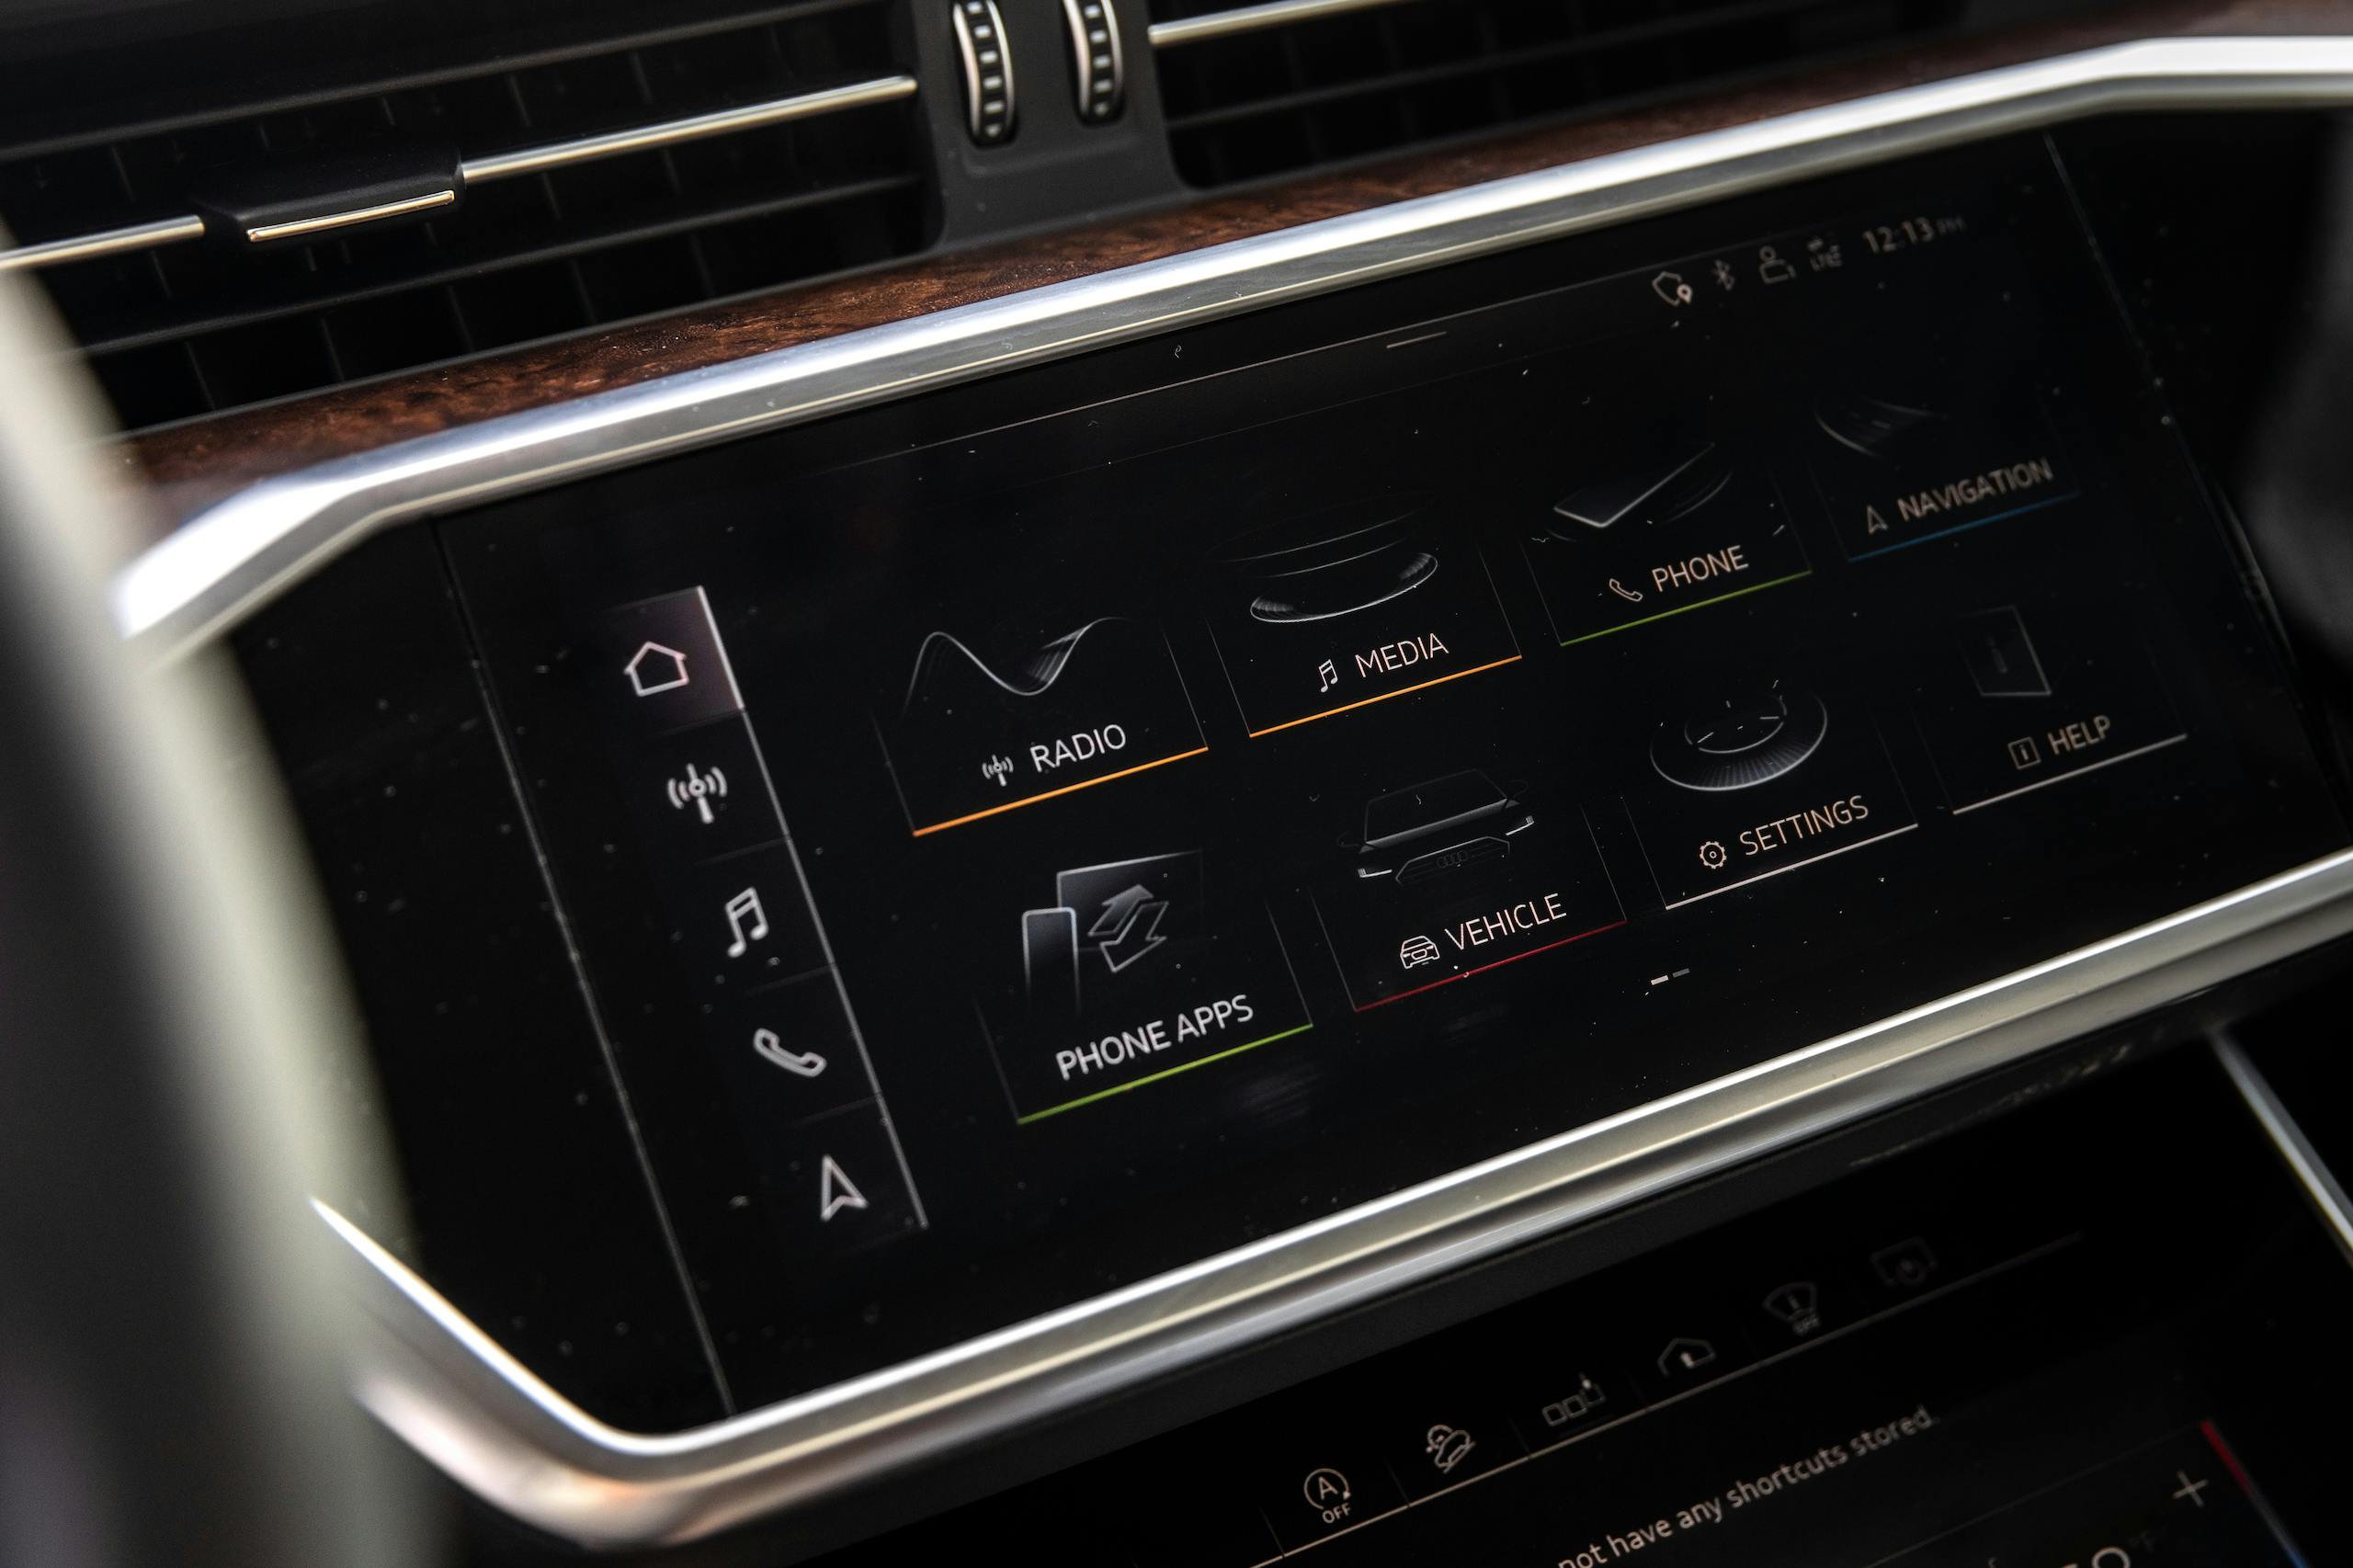 Audi A6 Allroad Quattro Wagon interior infotainment screen detail